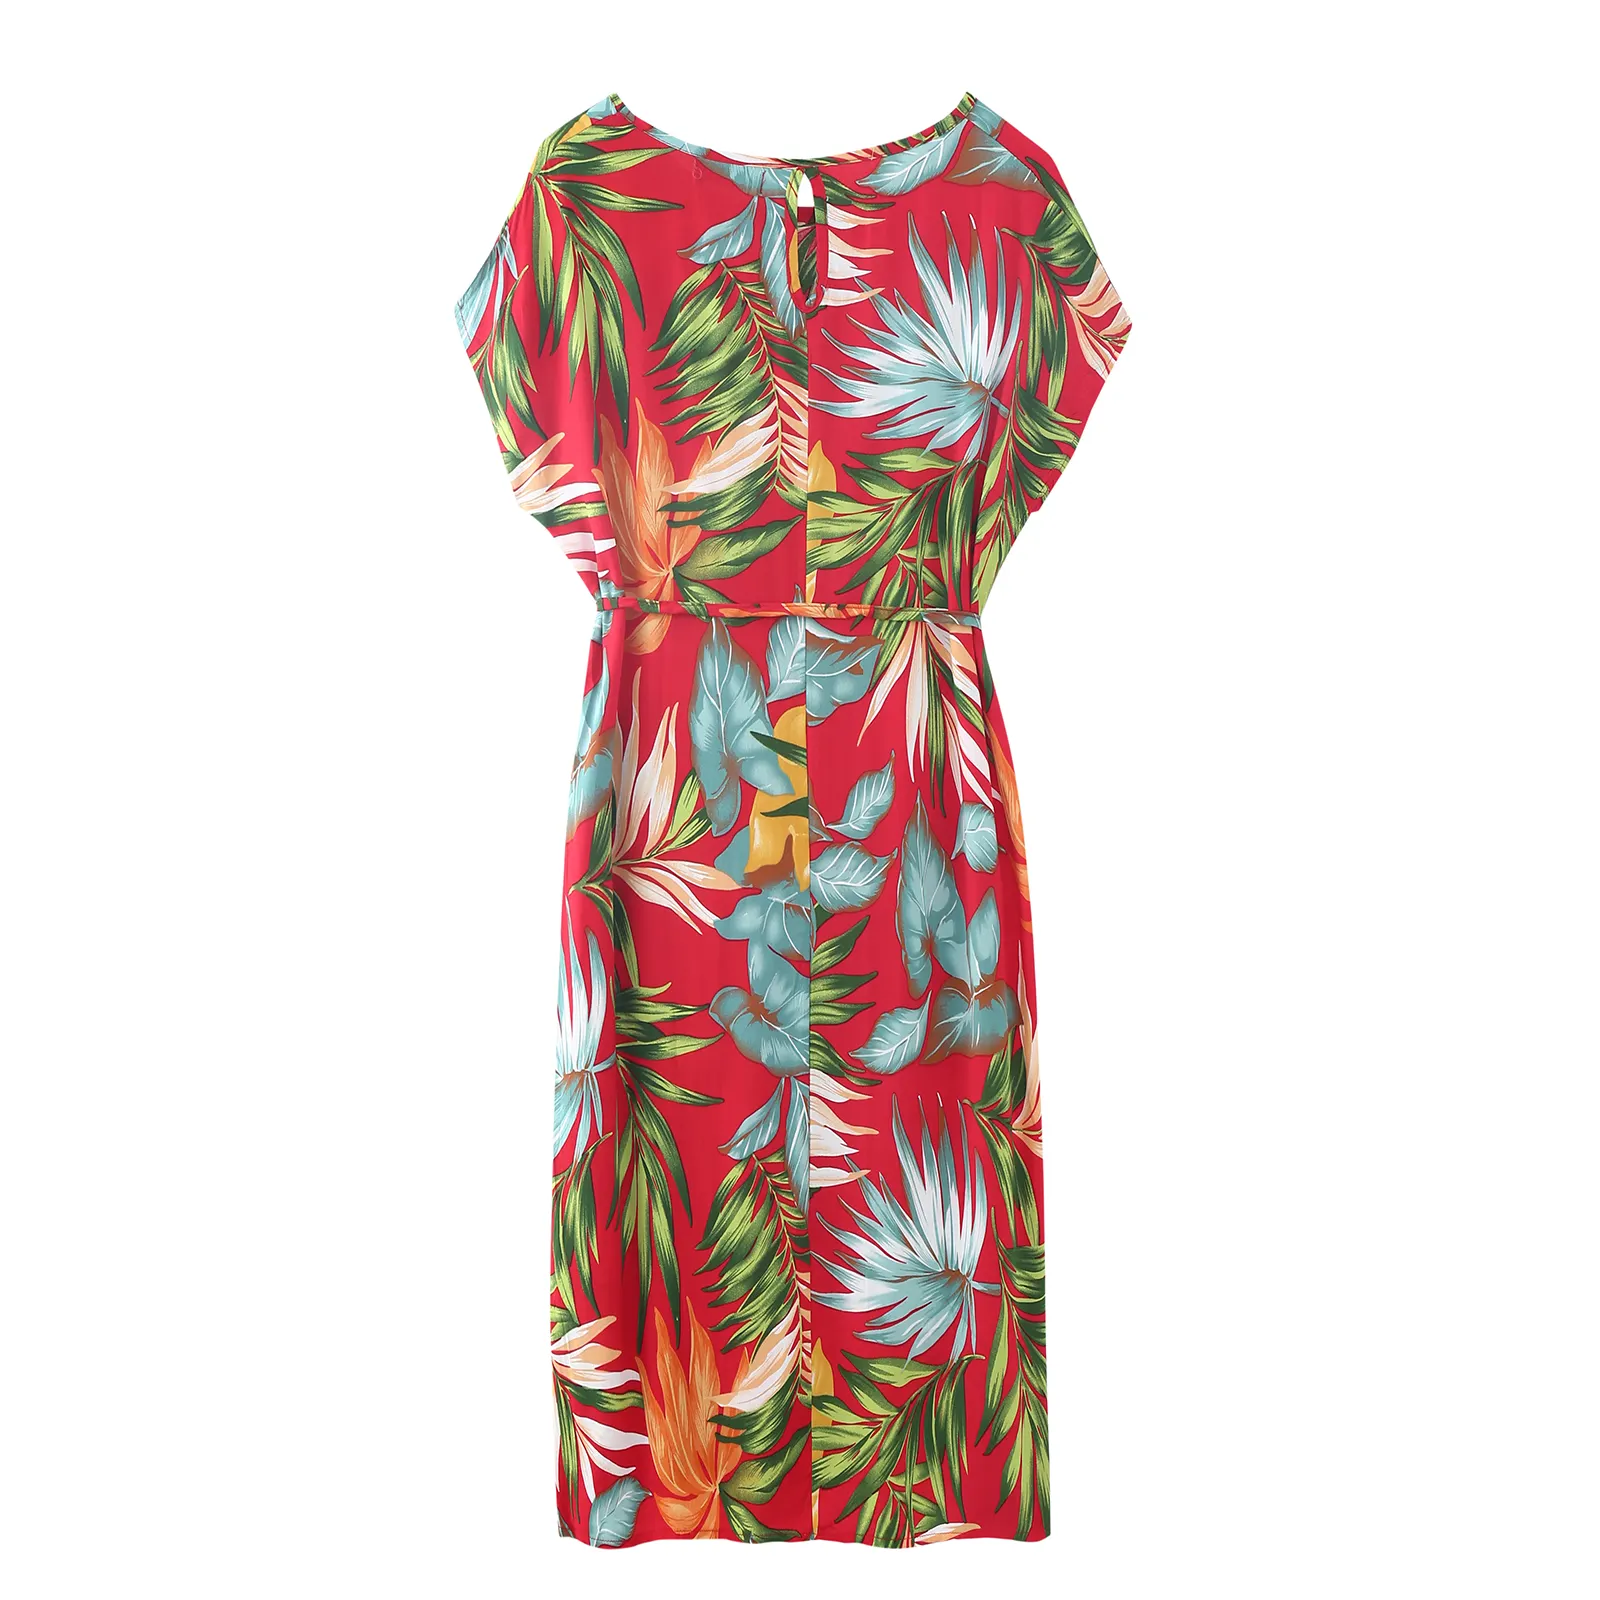 Summer short sleeve women puls size loose belt red jacquard dress printed green leaf pattern floral dress